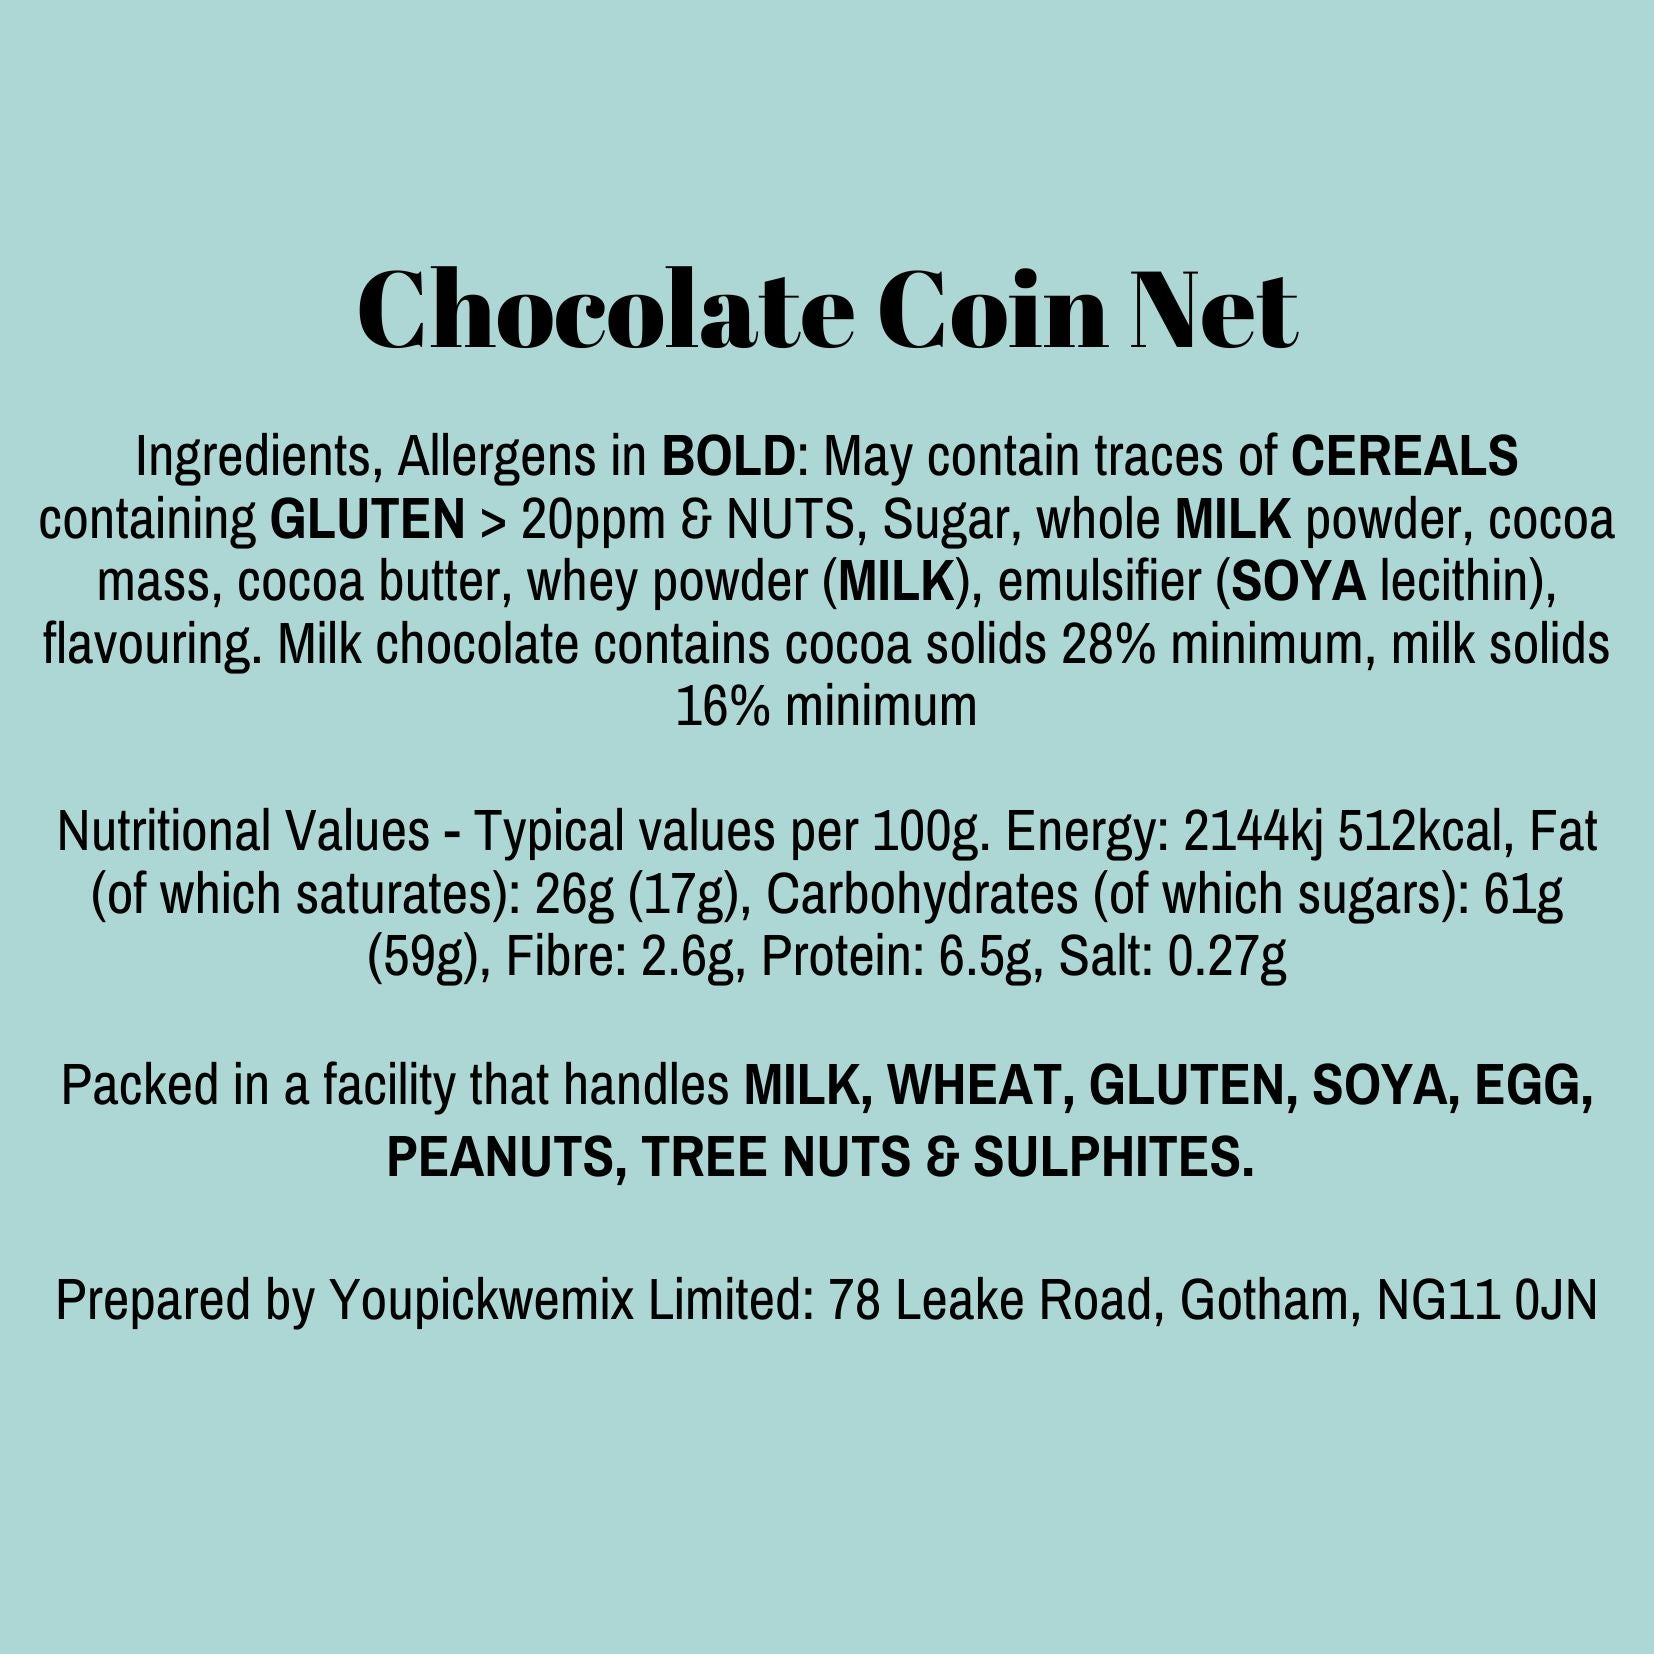 Chocolate Coin Net